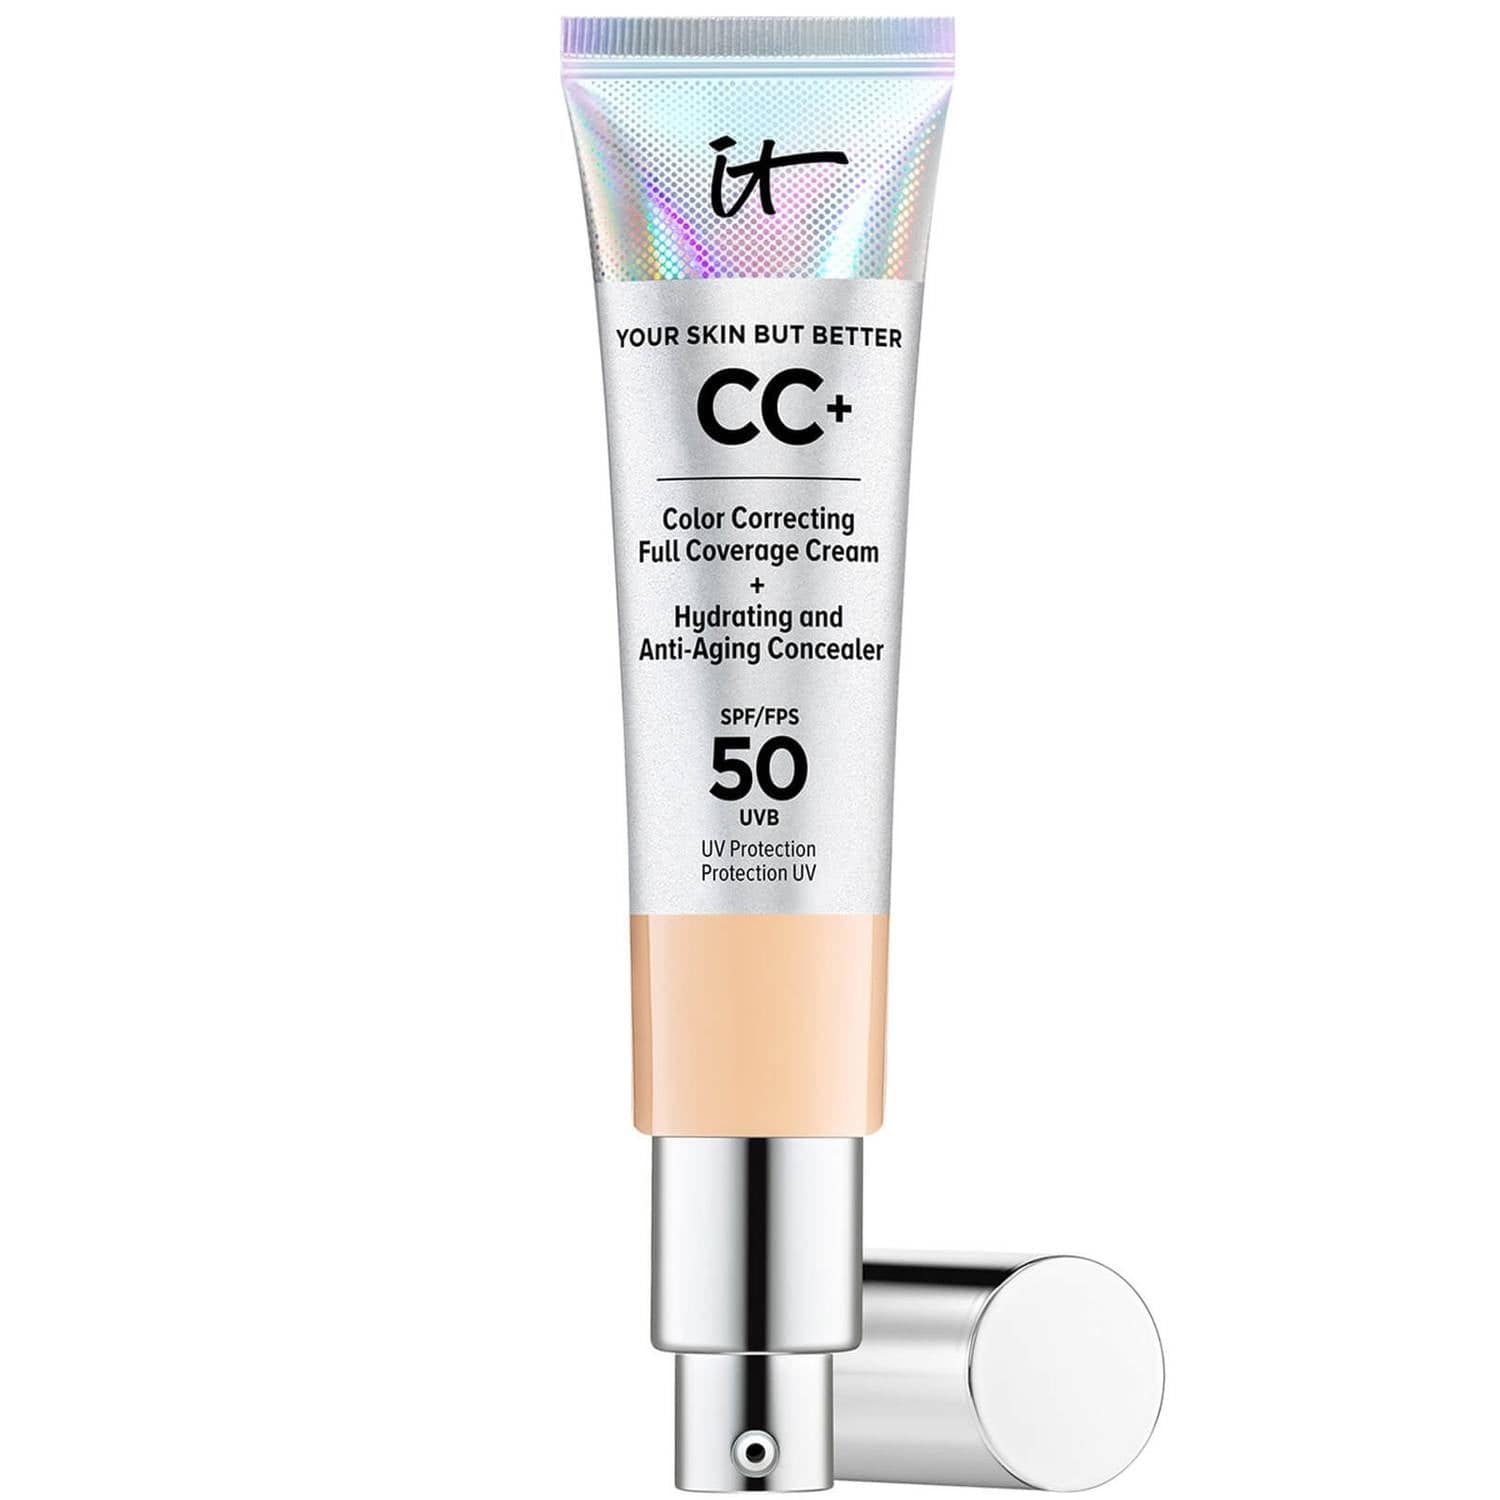 IT COSMETICS Beauty IT Cosmetics Your Skin But Better CC+ Cream with SPF50 32ml - Medium